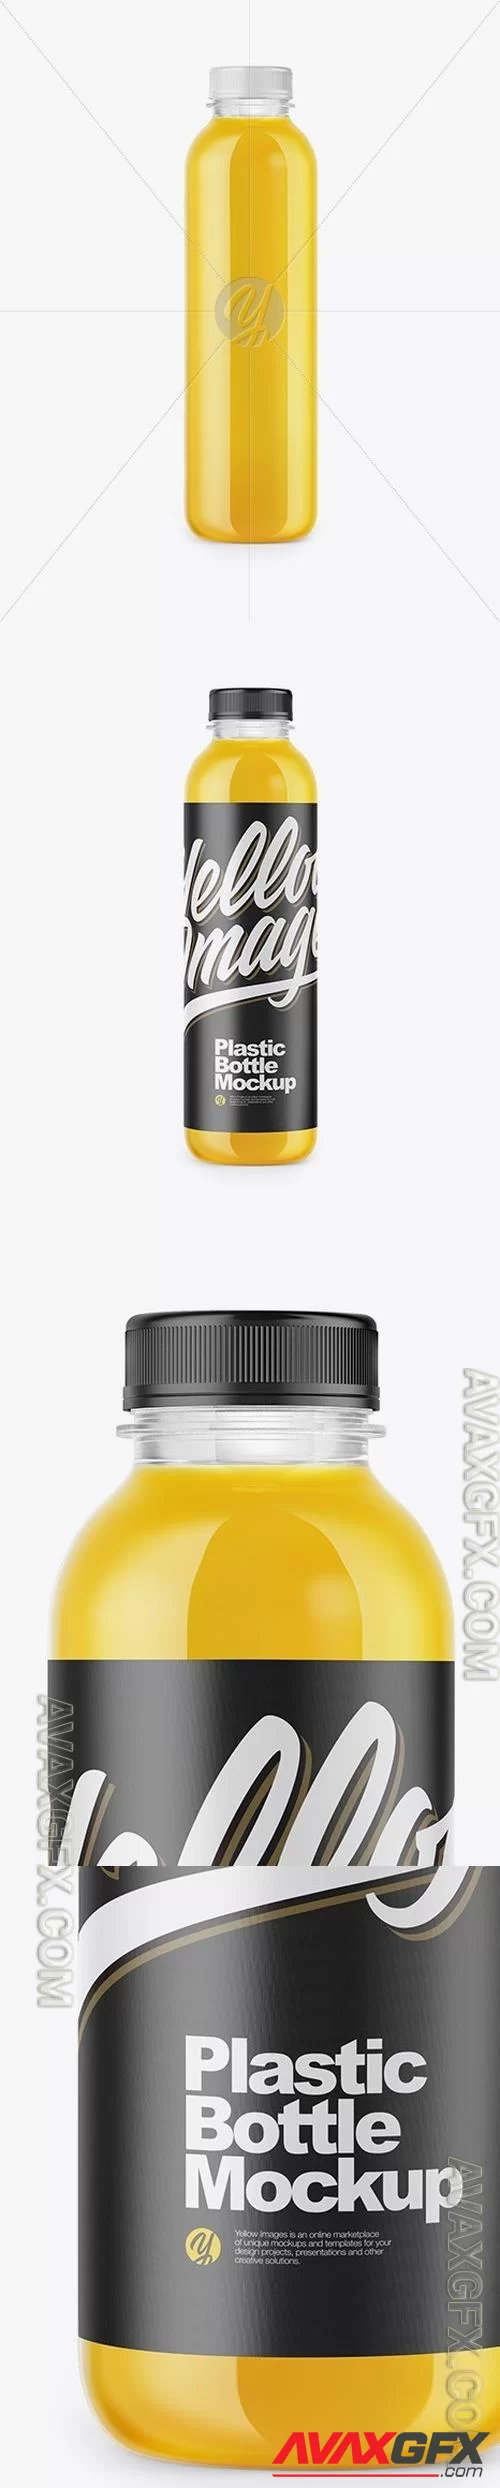 Clear Bottle with Orange Juice Mockup 46528 [TIF]